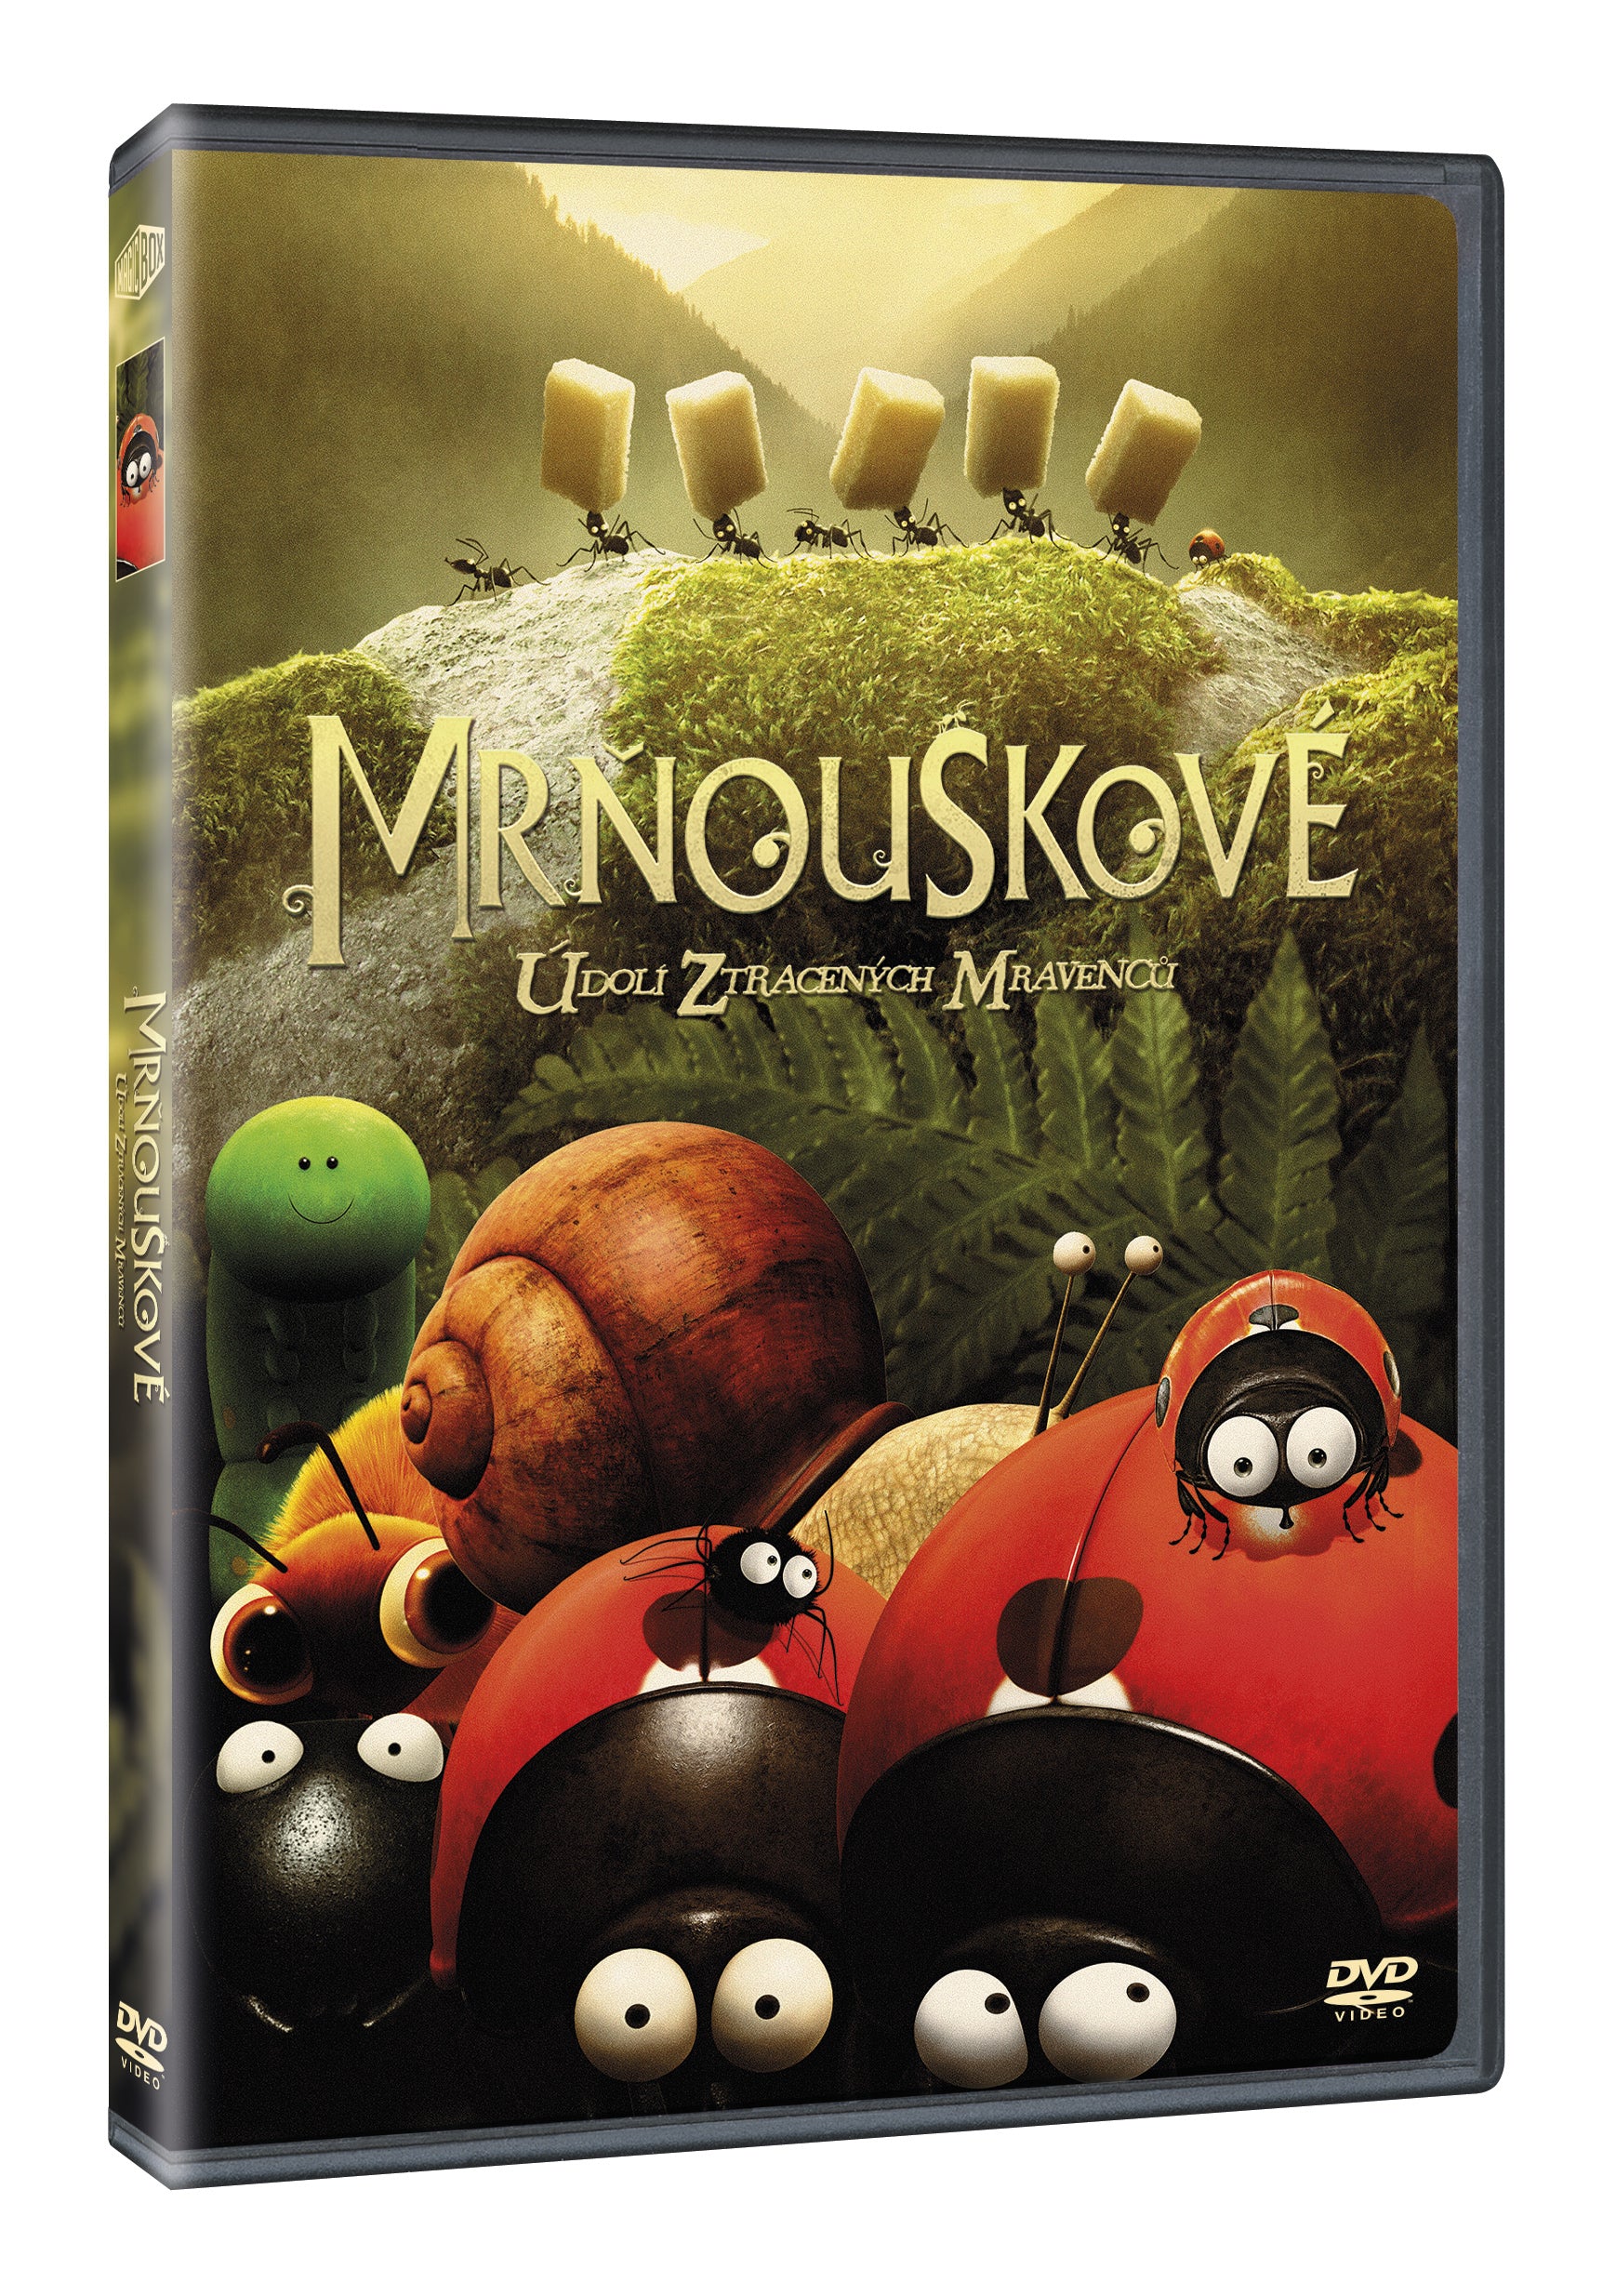 Mrnouskove: Udoli ztracenych mravencu DVD / Minuscule - La vallee des fourmis perdues